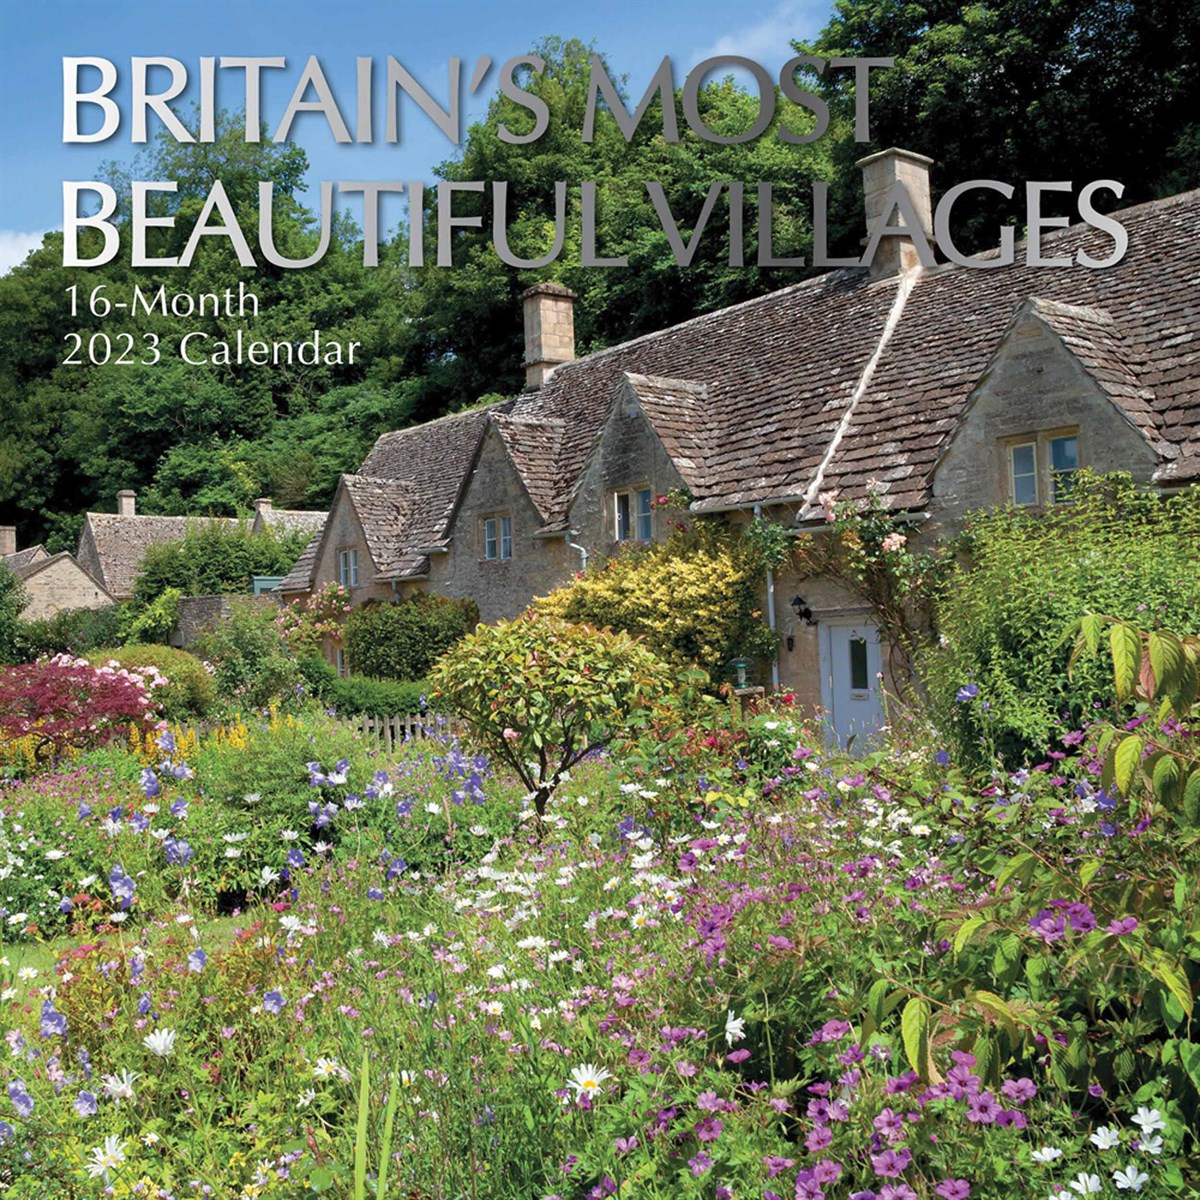 Britain’s Most Beautiful Villages 2023 Calendars